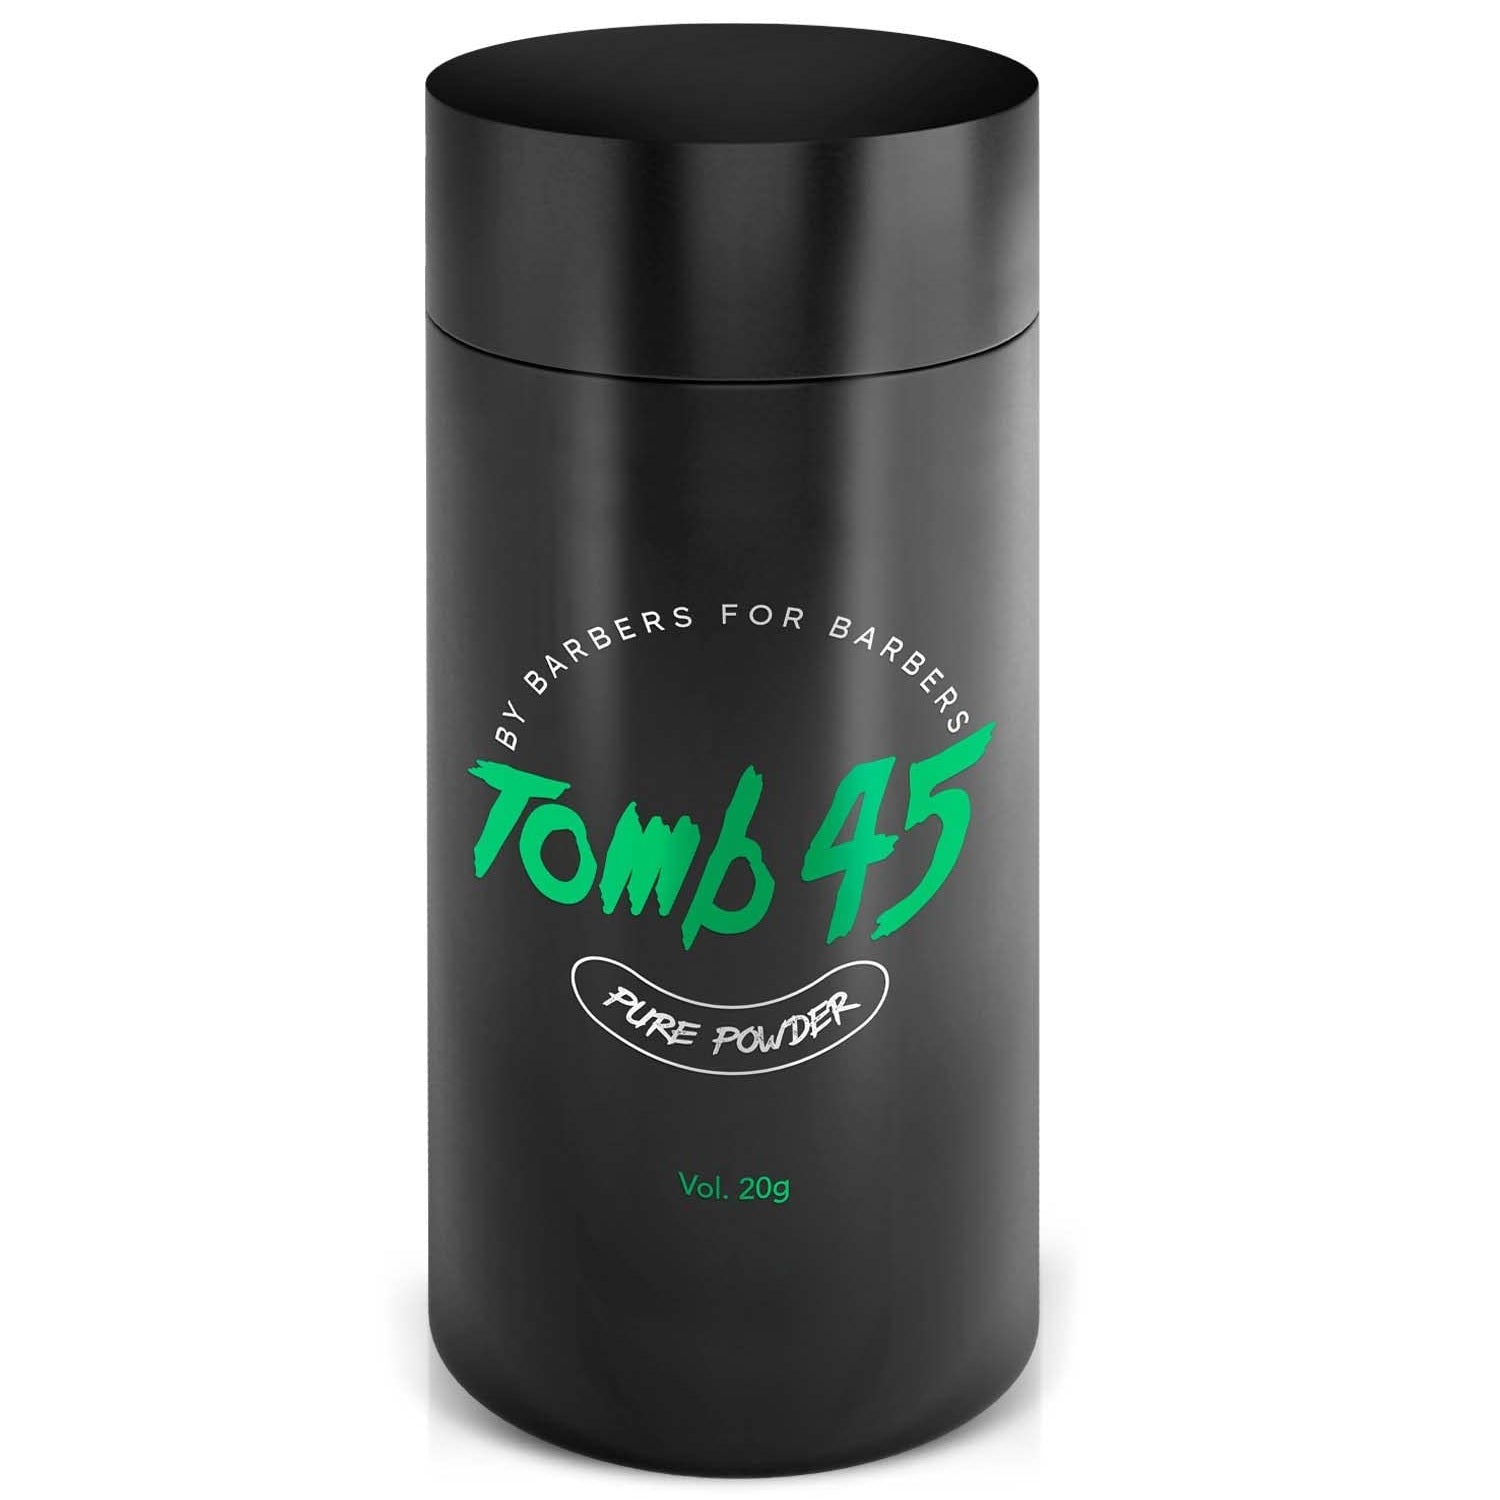 Tomb45 Pure Powder 0.7 oz - Multipack